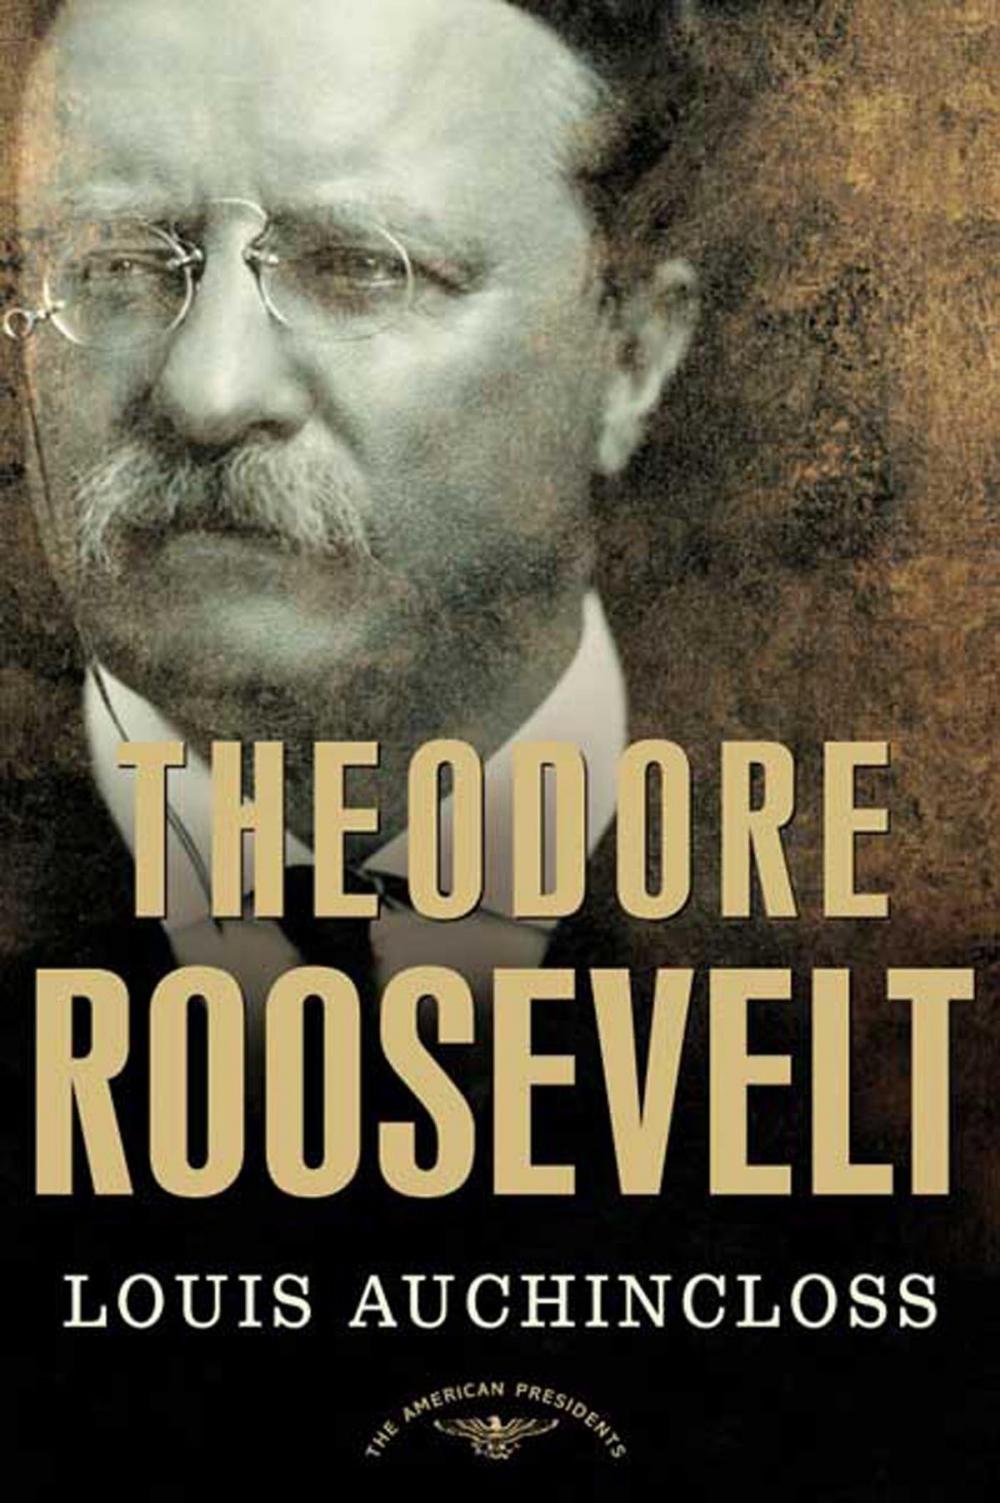 Big bigCover of Theodore Roosevelt